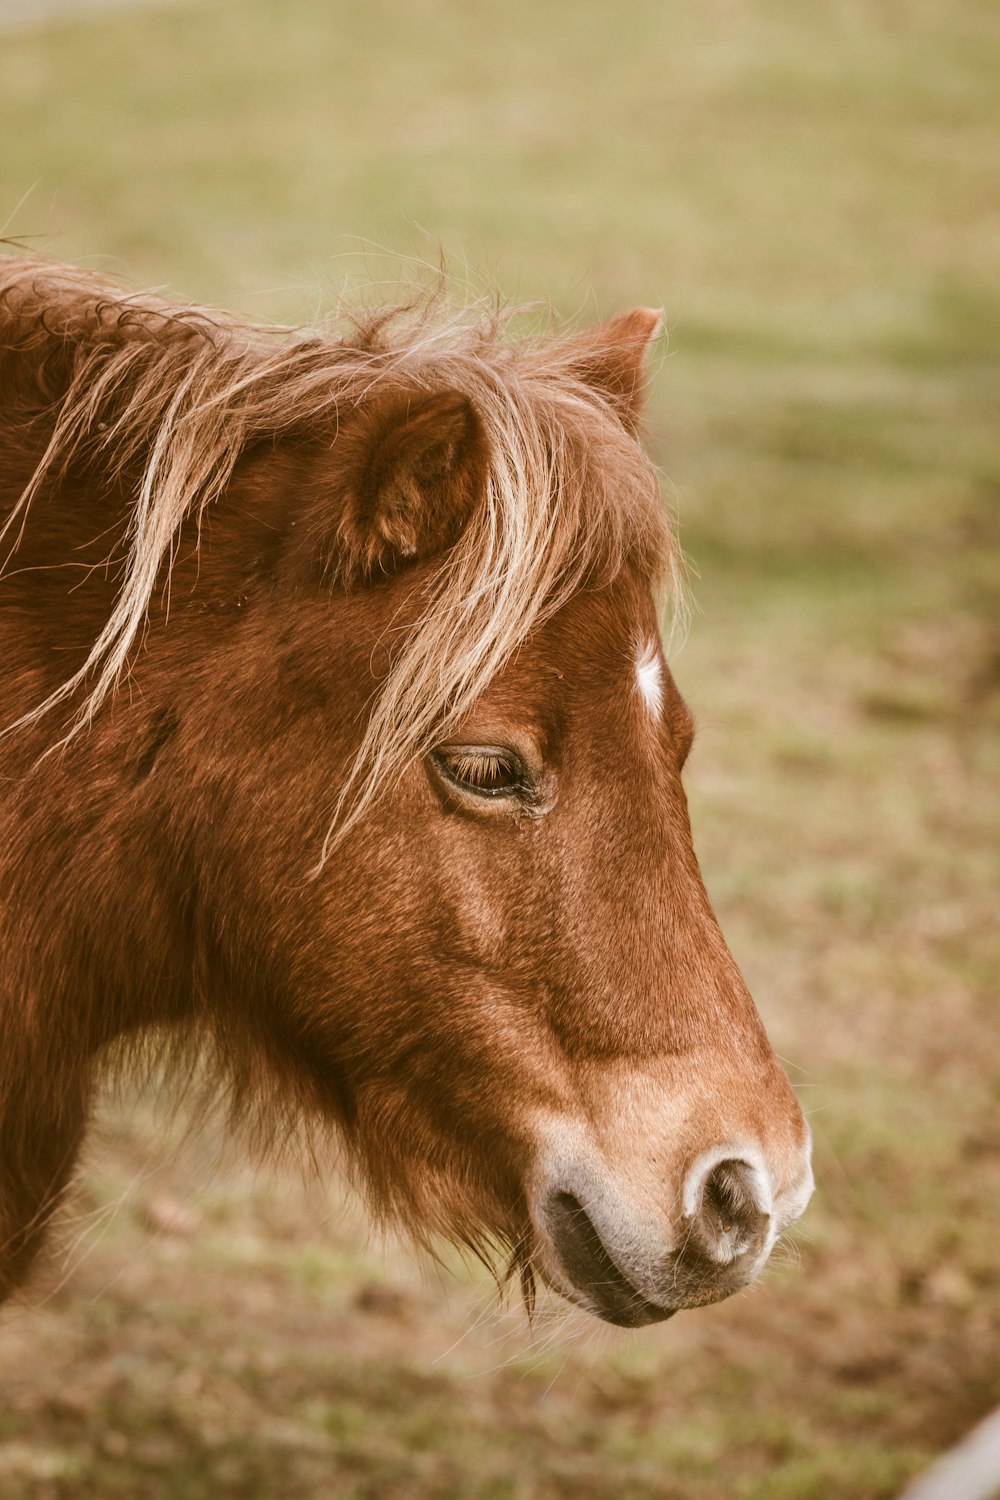 brown horse standing on grass field